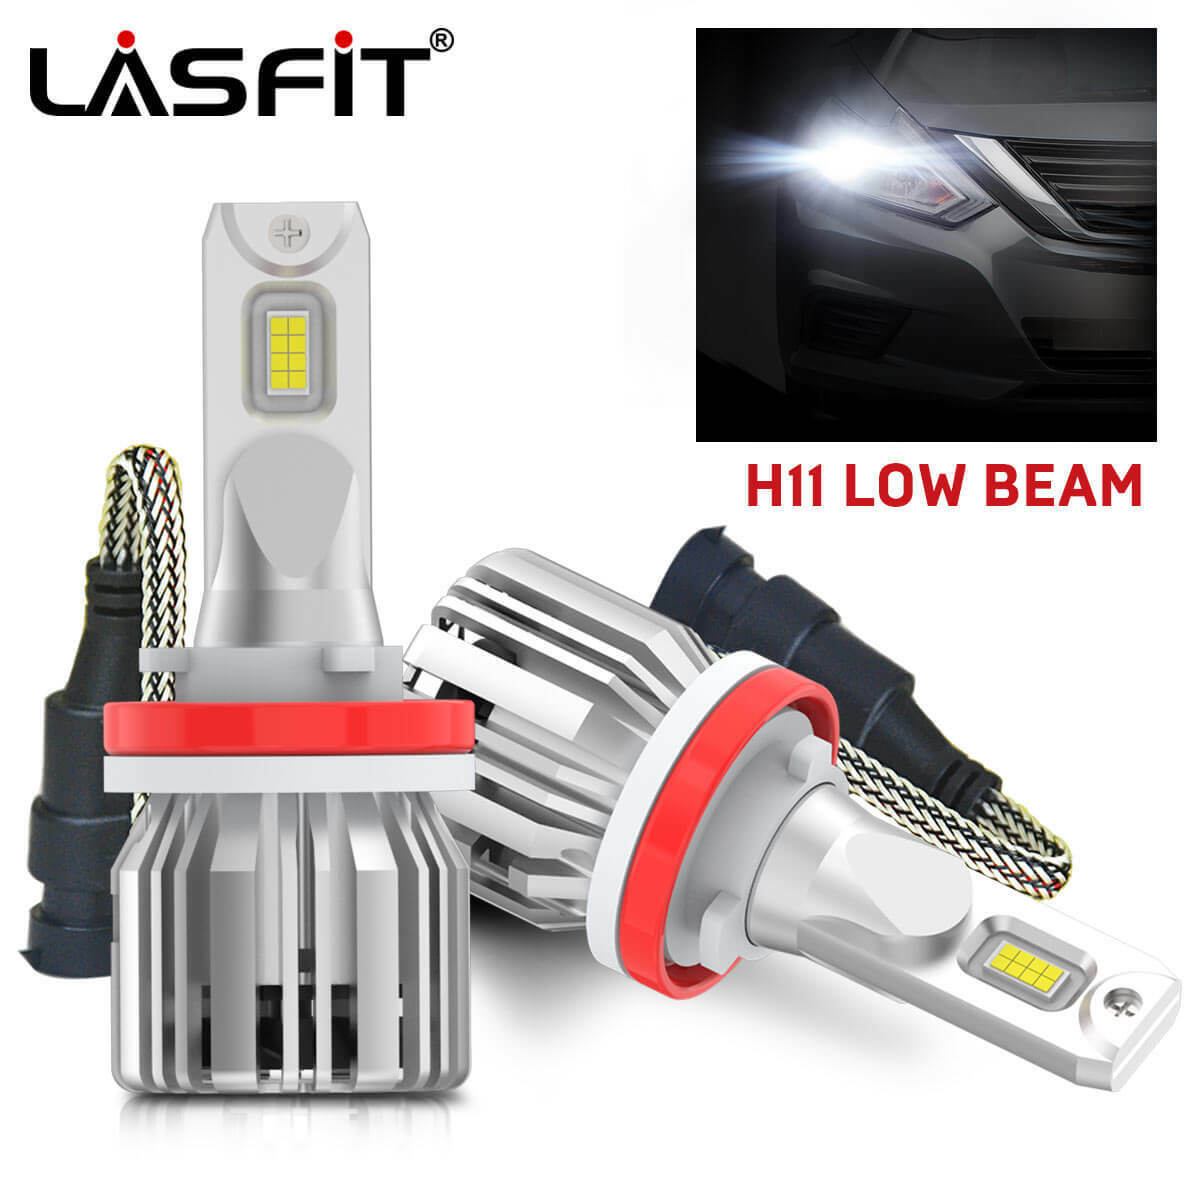 Lasfit H11 H16 LED Headlight Bulb Low Beam for Chevy Silverado 1500 2500 3500 HD